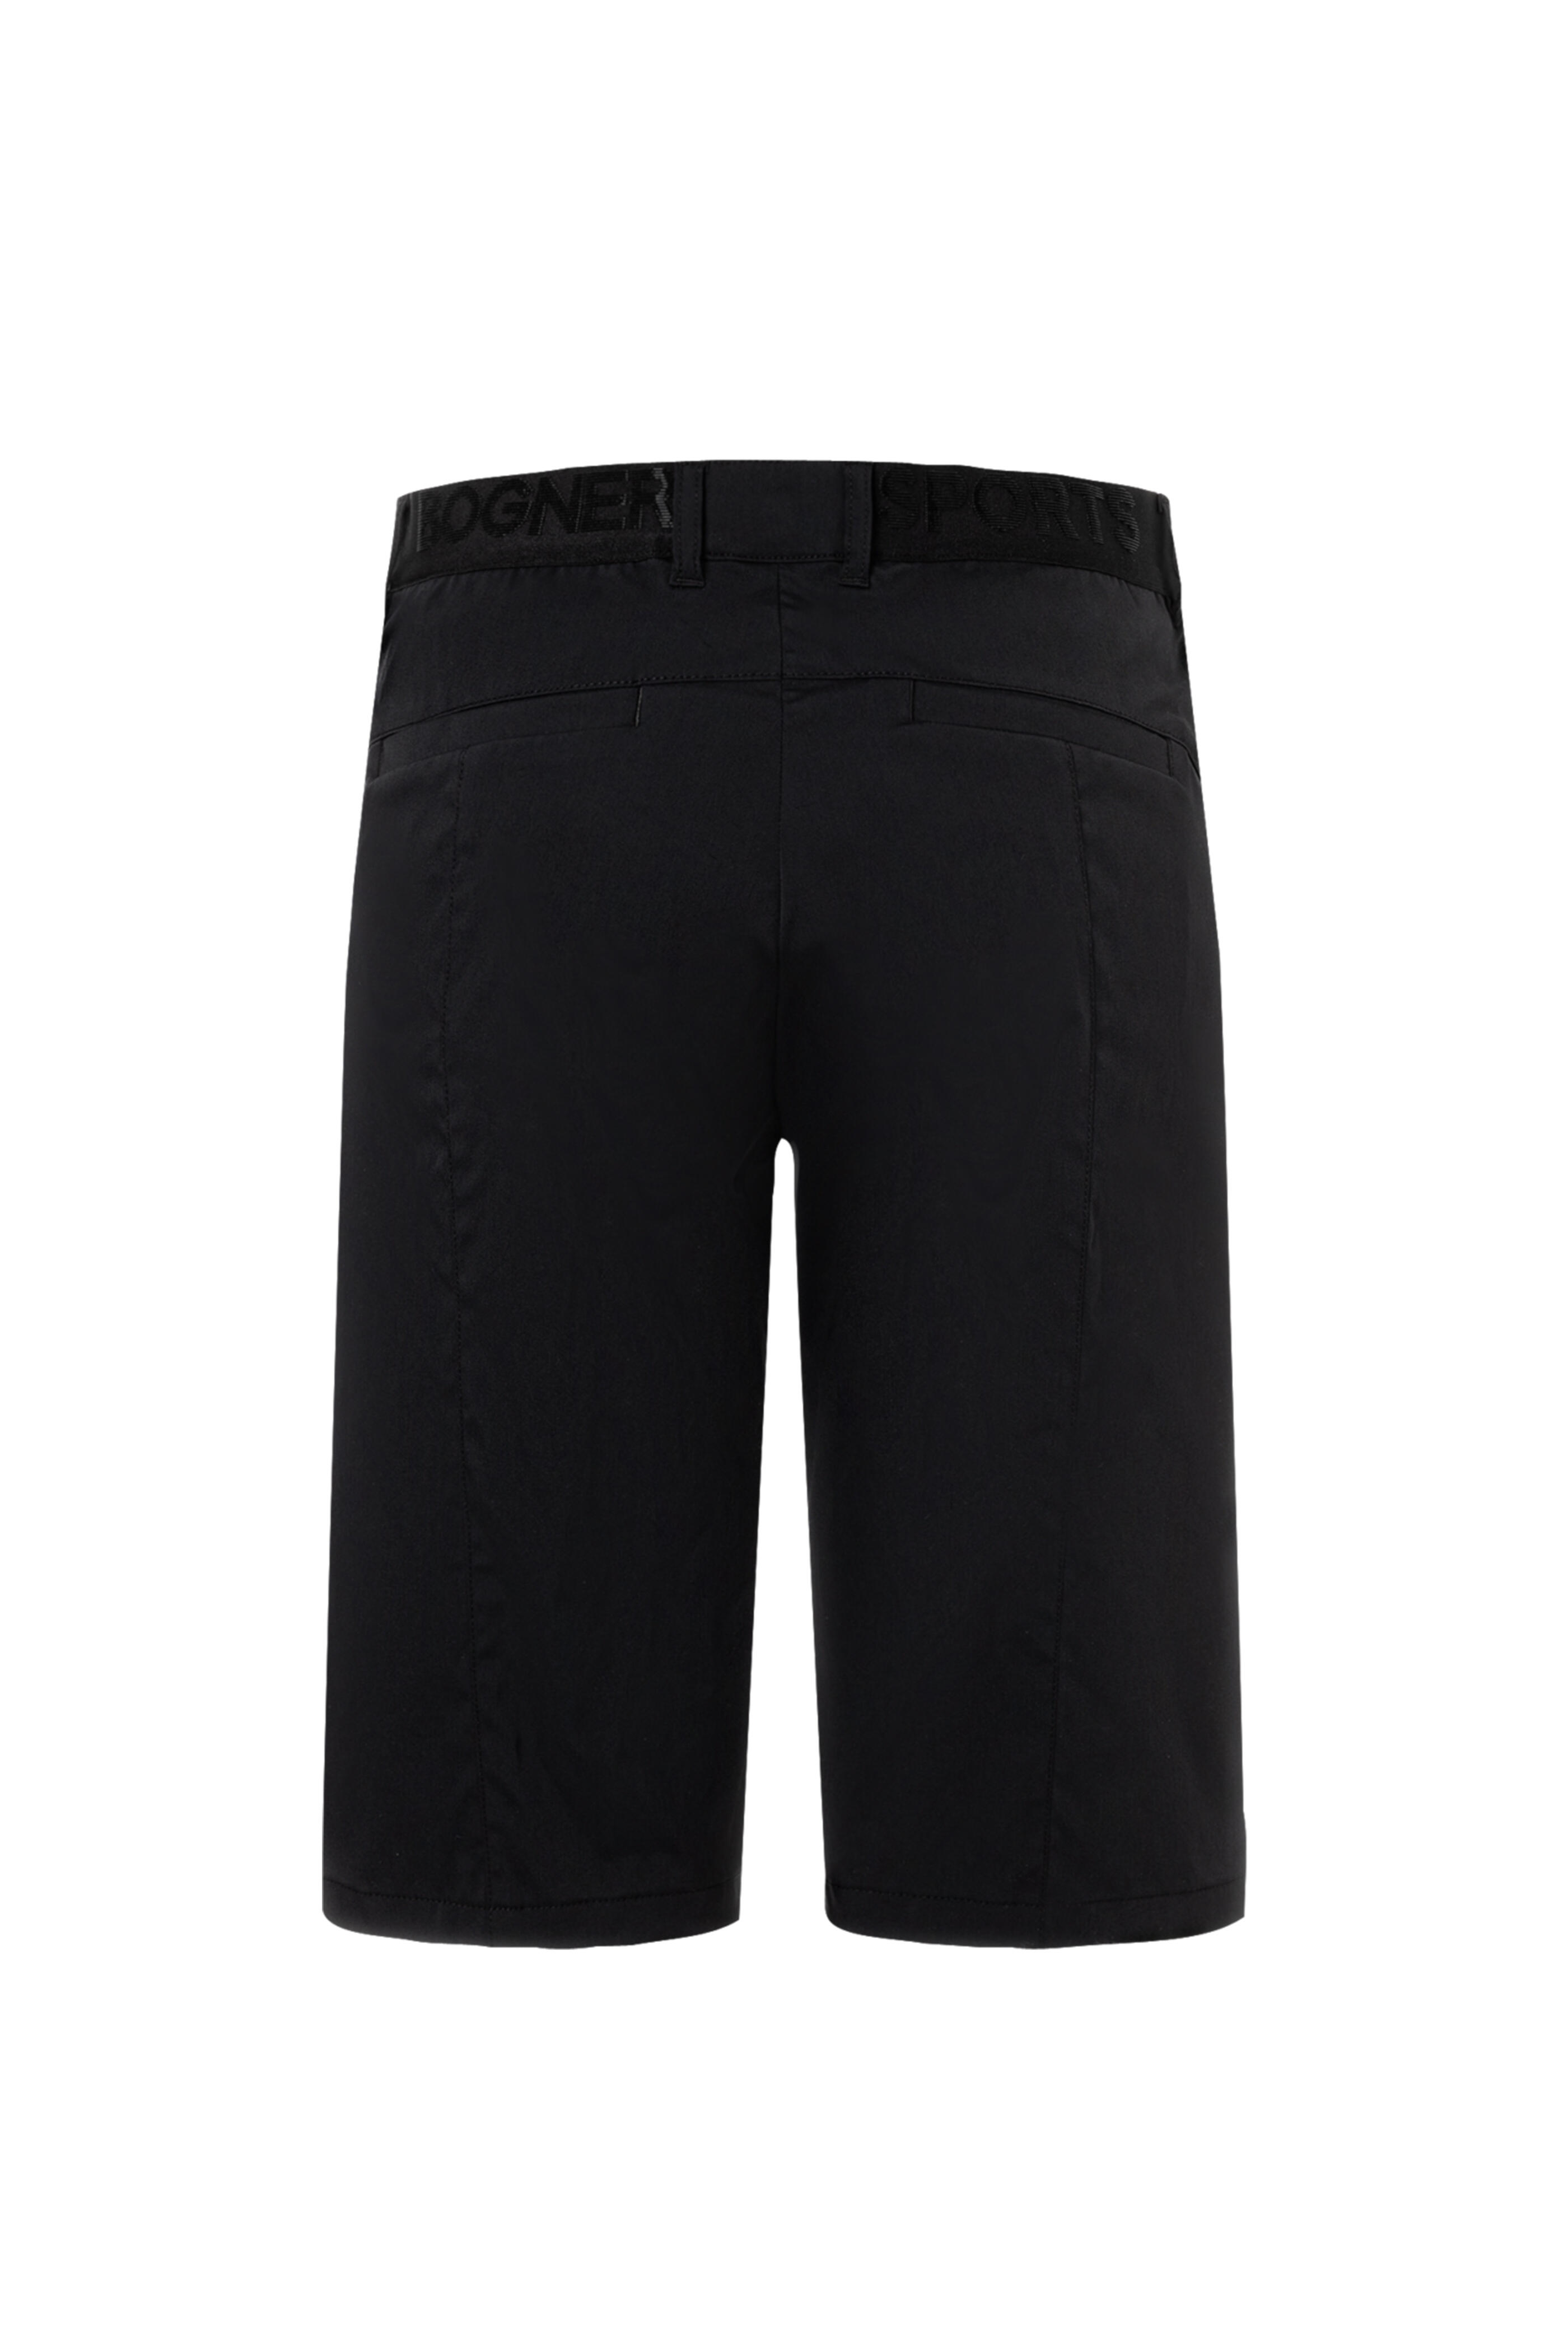 Bogner - Zena Black Functional Bermuda Shorts | Mitchell Stores